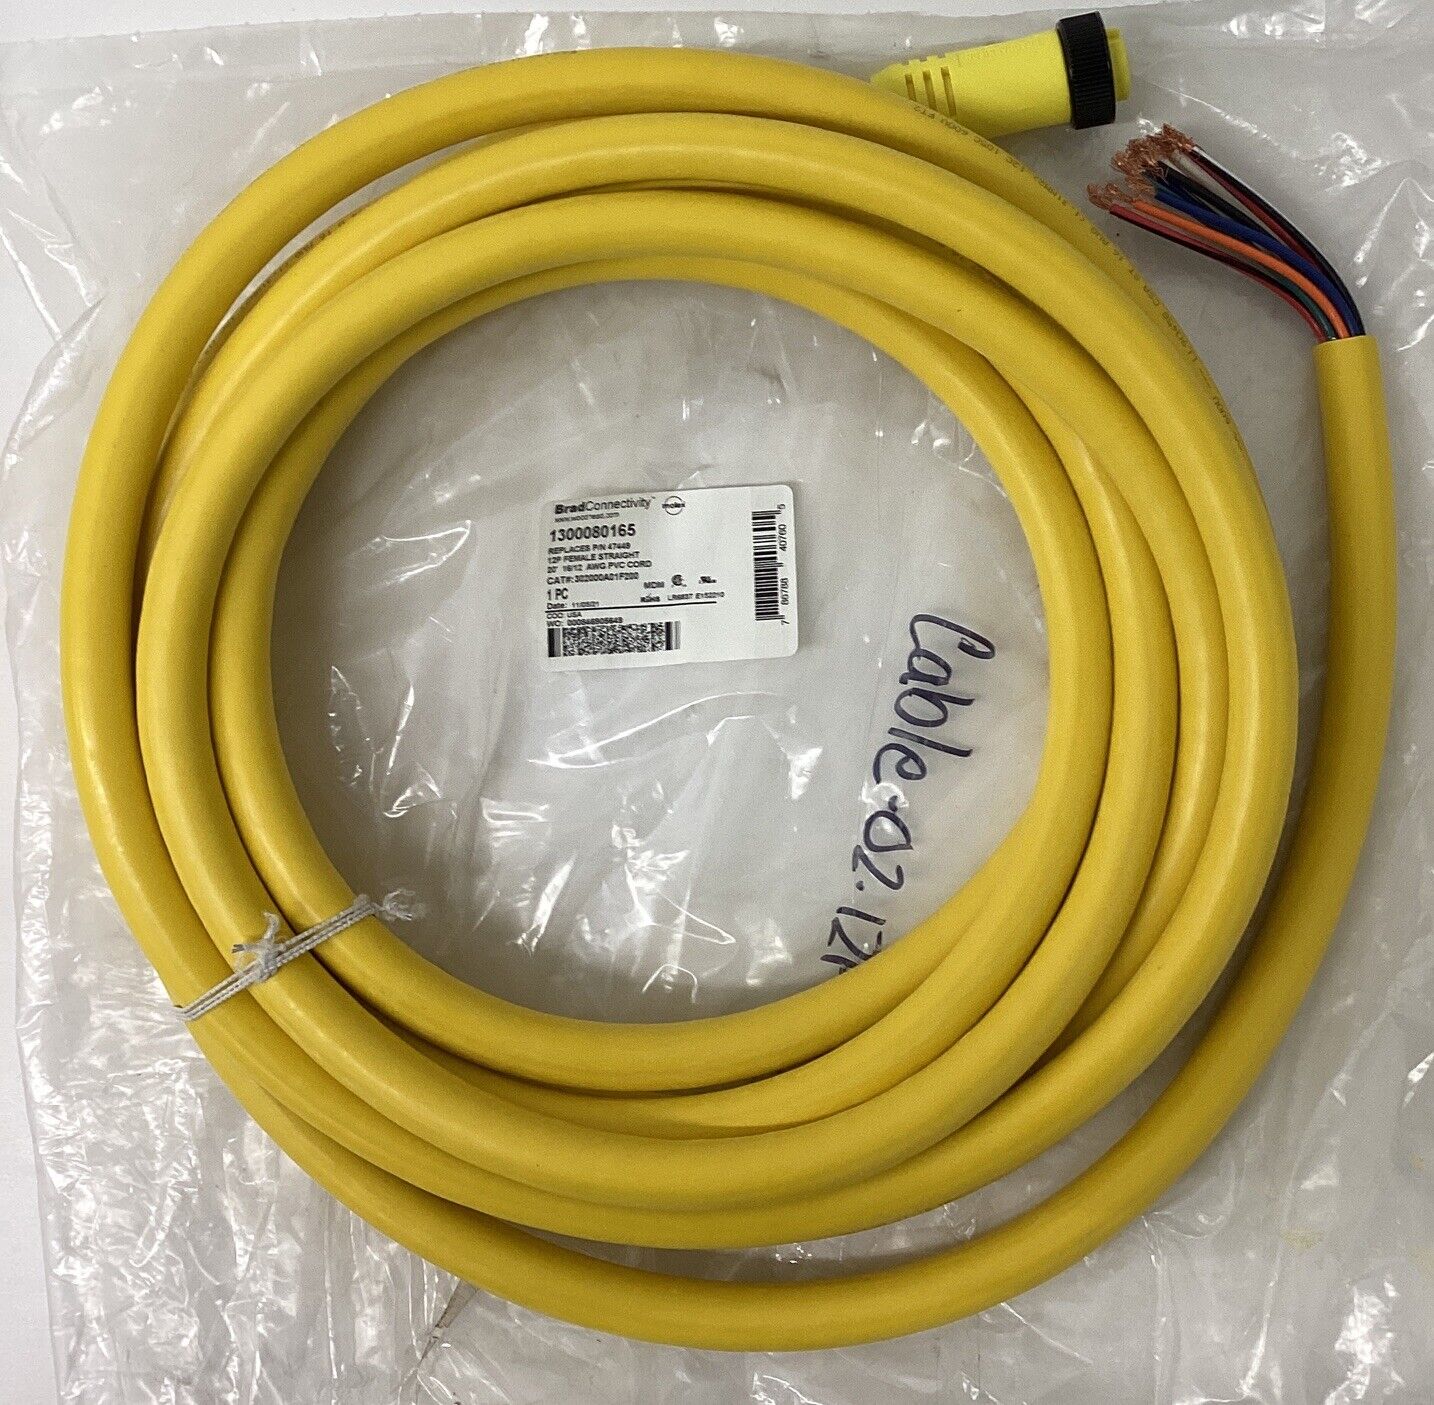 Brad Harrison 1300080165 / 47449  12-Pole Female Cable 20ft. (CBL163) - 0